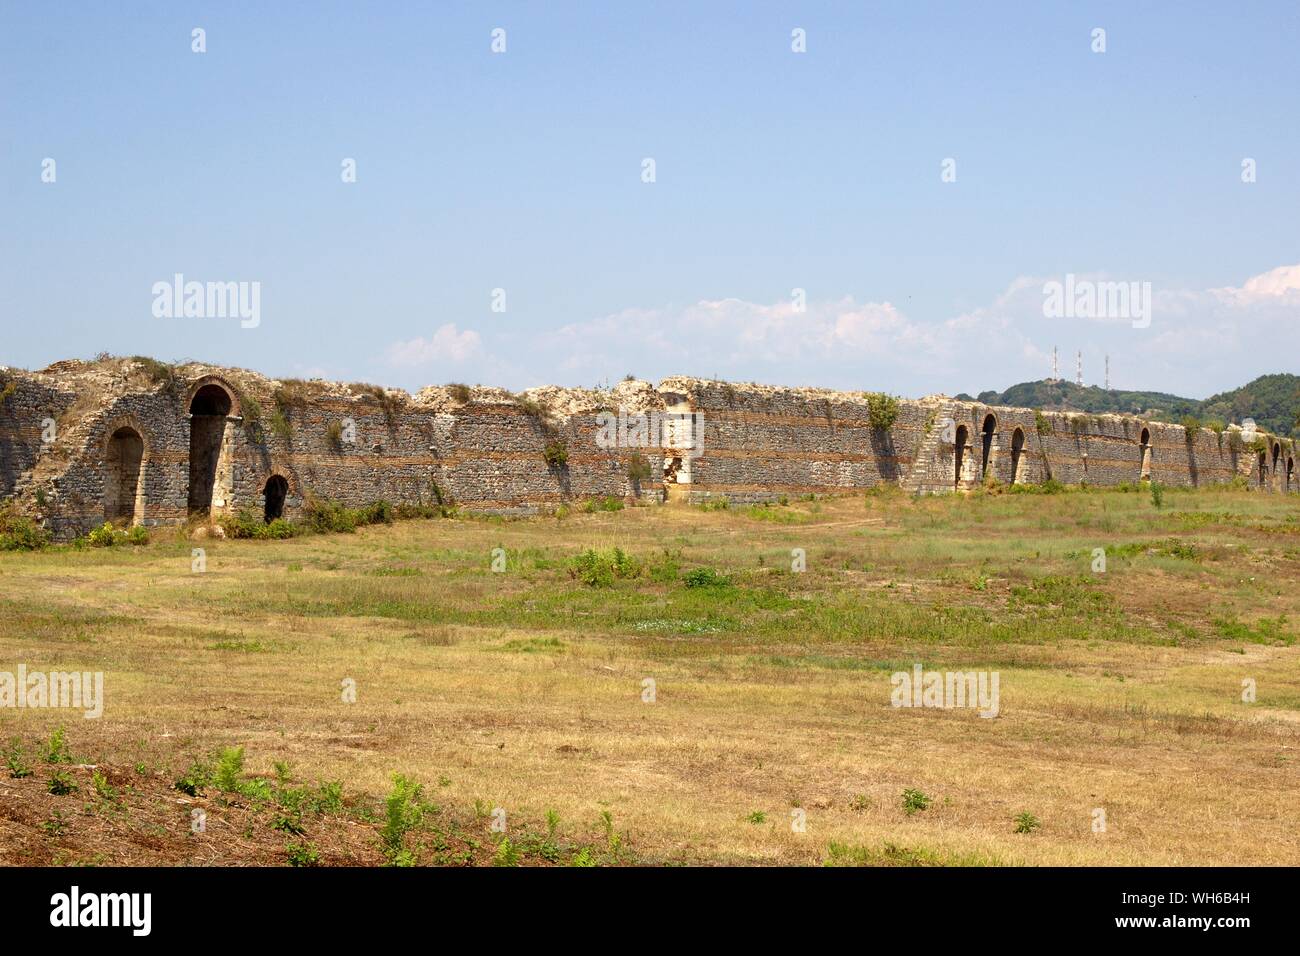 The ancient walls of the Roman empire city of Nicopolis near the city of Preveza in Epirus, Greece Stock Photo